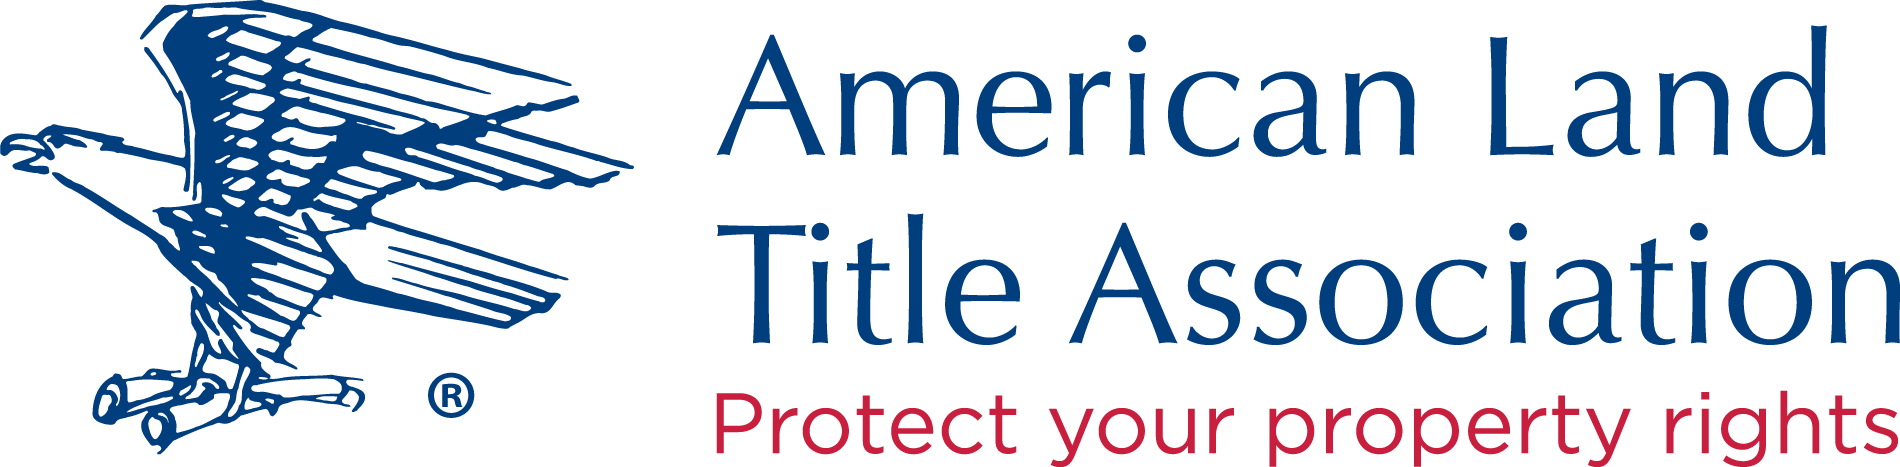 American Land Title Association.png